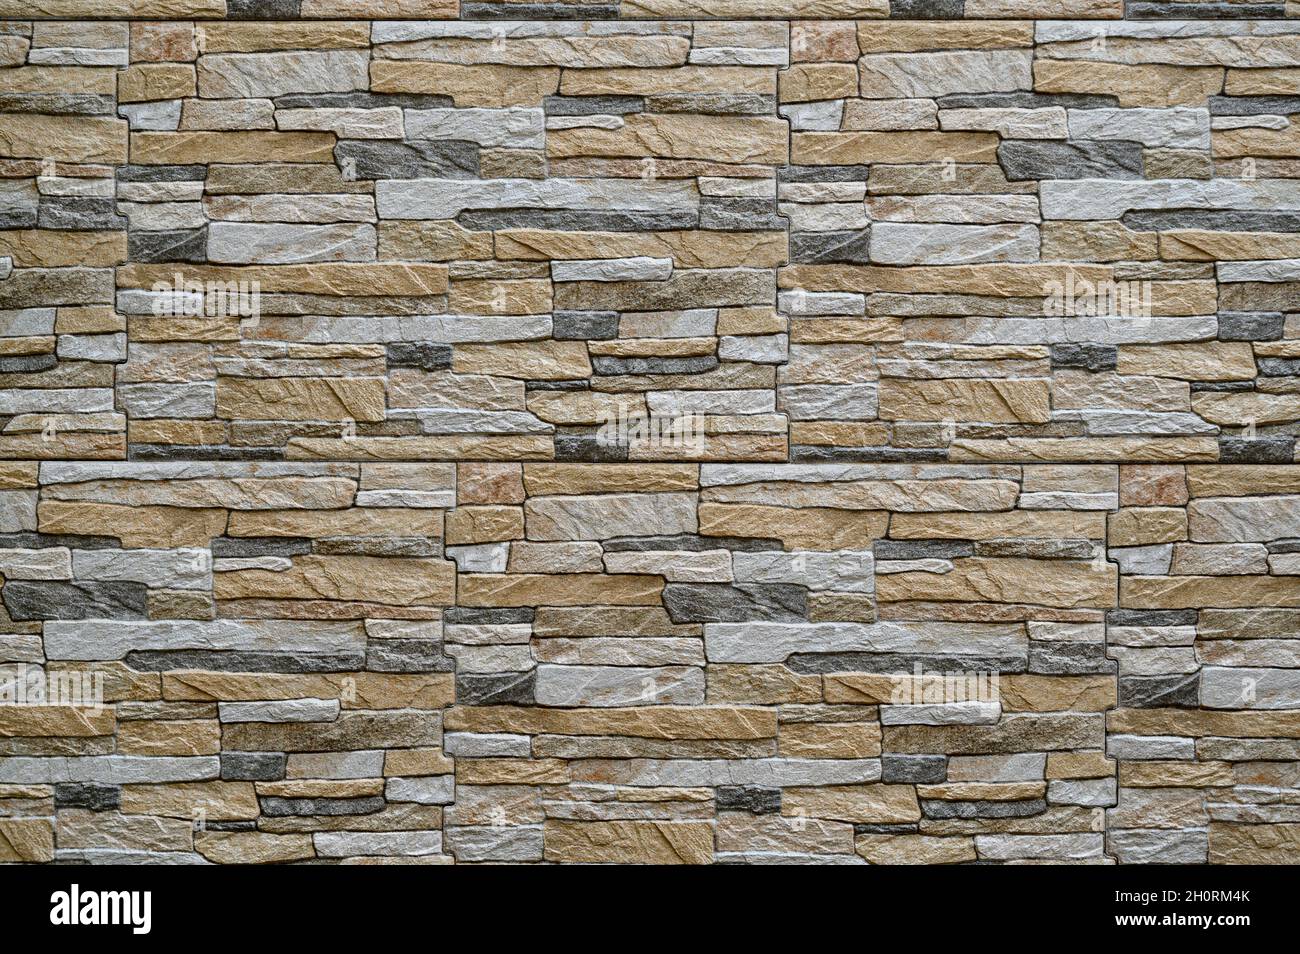 decorative cladding – tiles imitating rocks – a texture Stock Photo